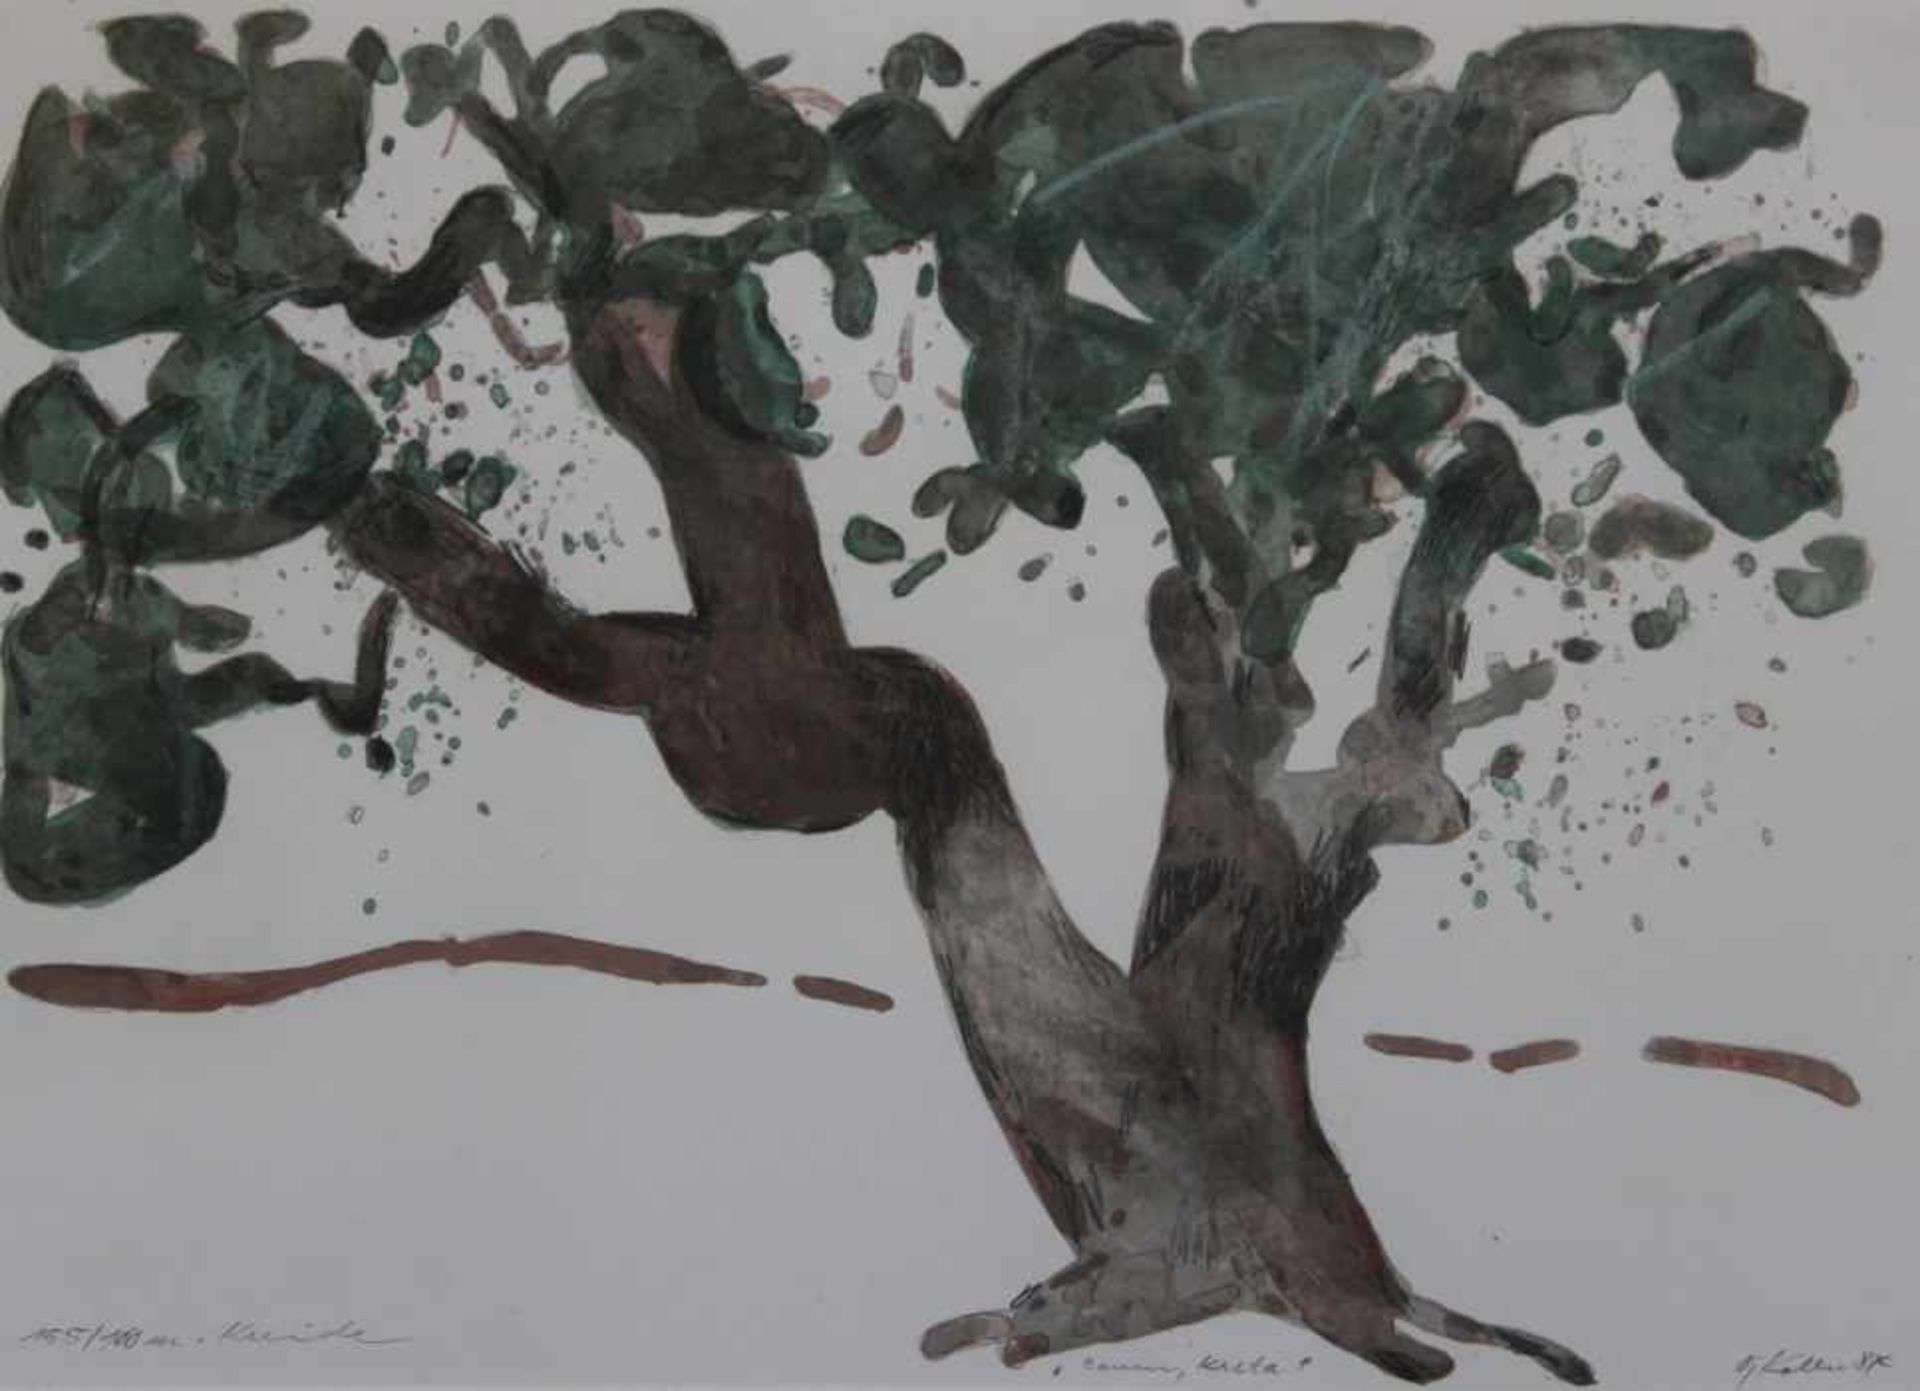 Farblithographie - Oskar Koller (16.10.1925 Erlangen - 17.5.2004 Fürth) "Baum, Kreta", r.u.